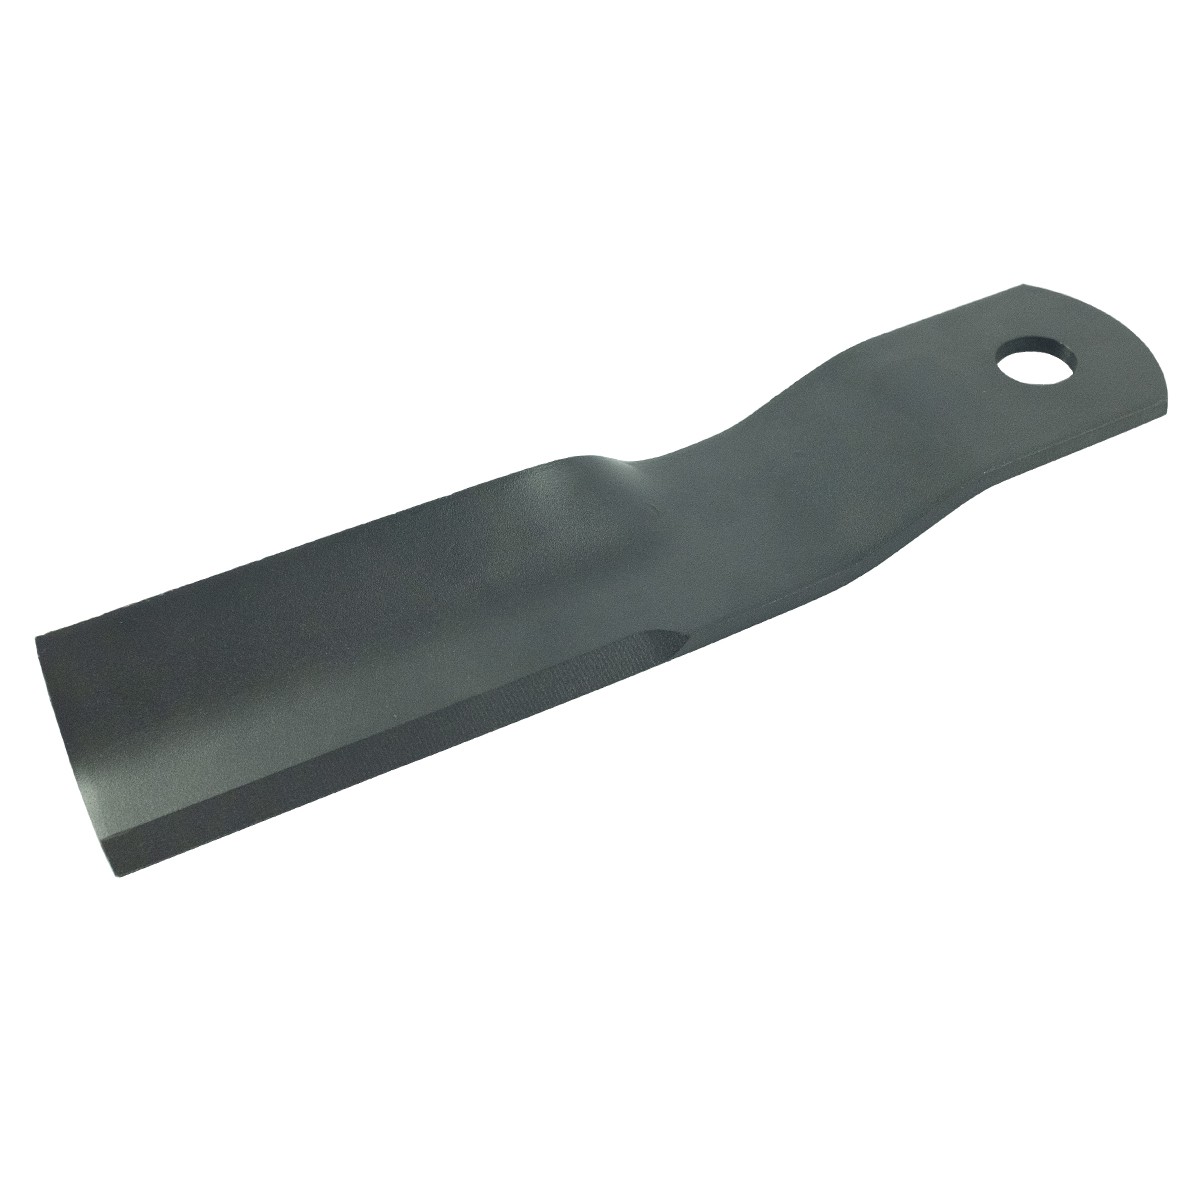 Řezací nůž LEVÝ 283 x 60 mm / Iseki SCMA60 / Iseki SF450 / 8675-306-002-00